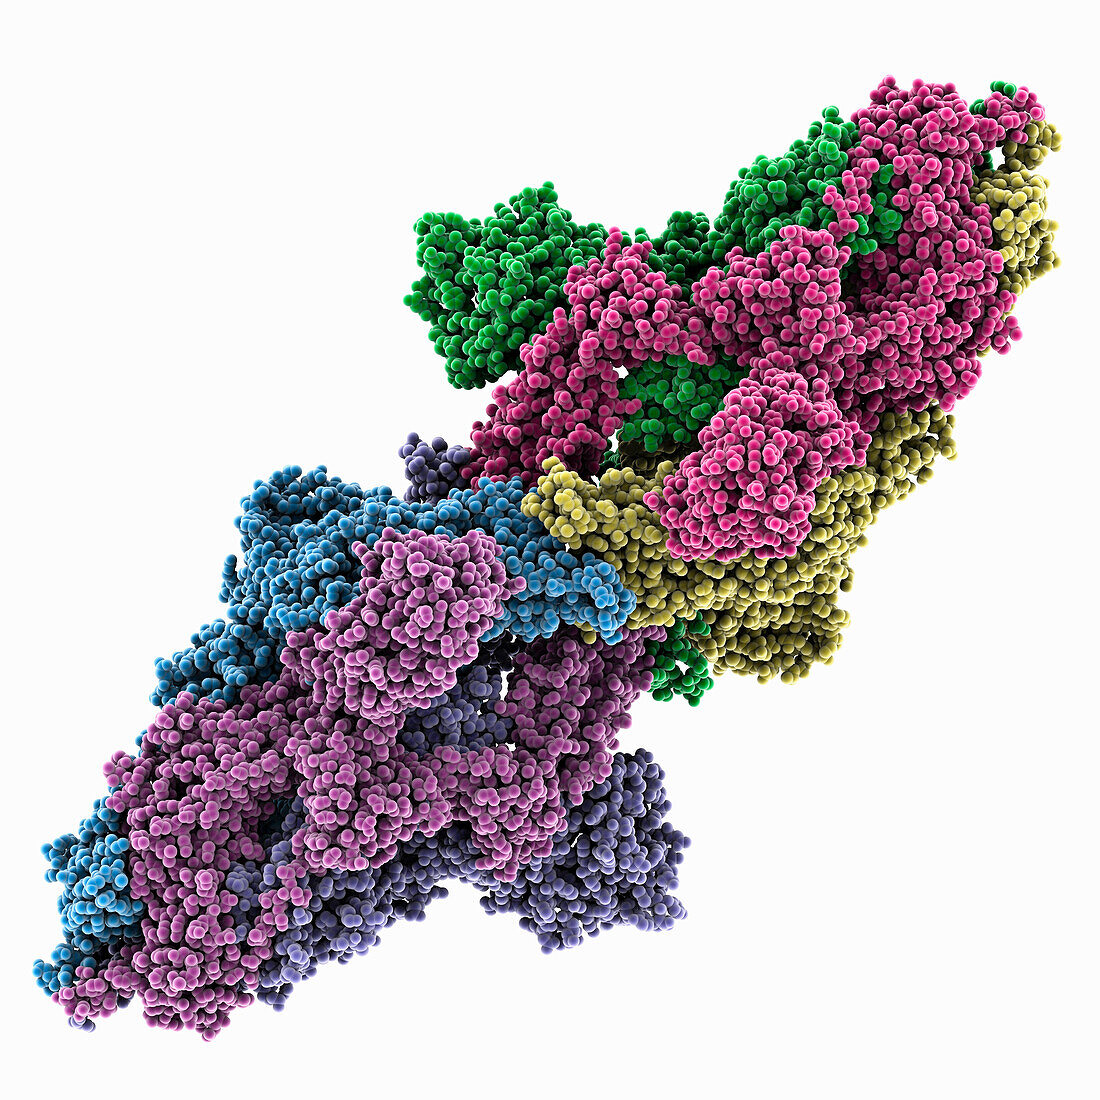 SARS-CoV-2 Kappa spike protein, molecular model